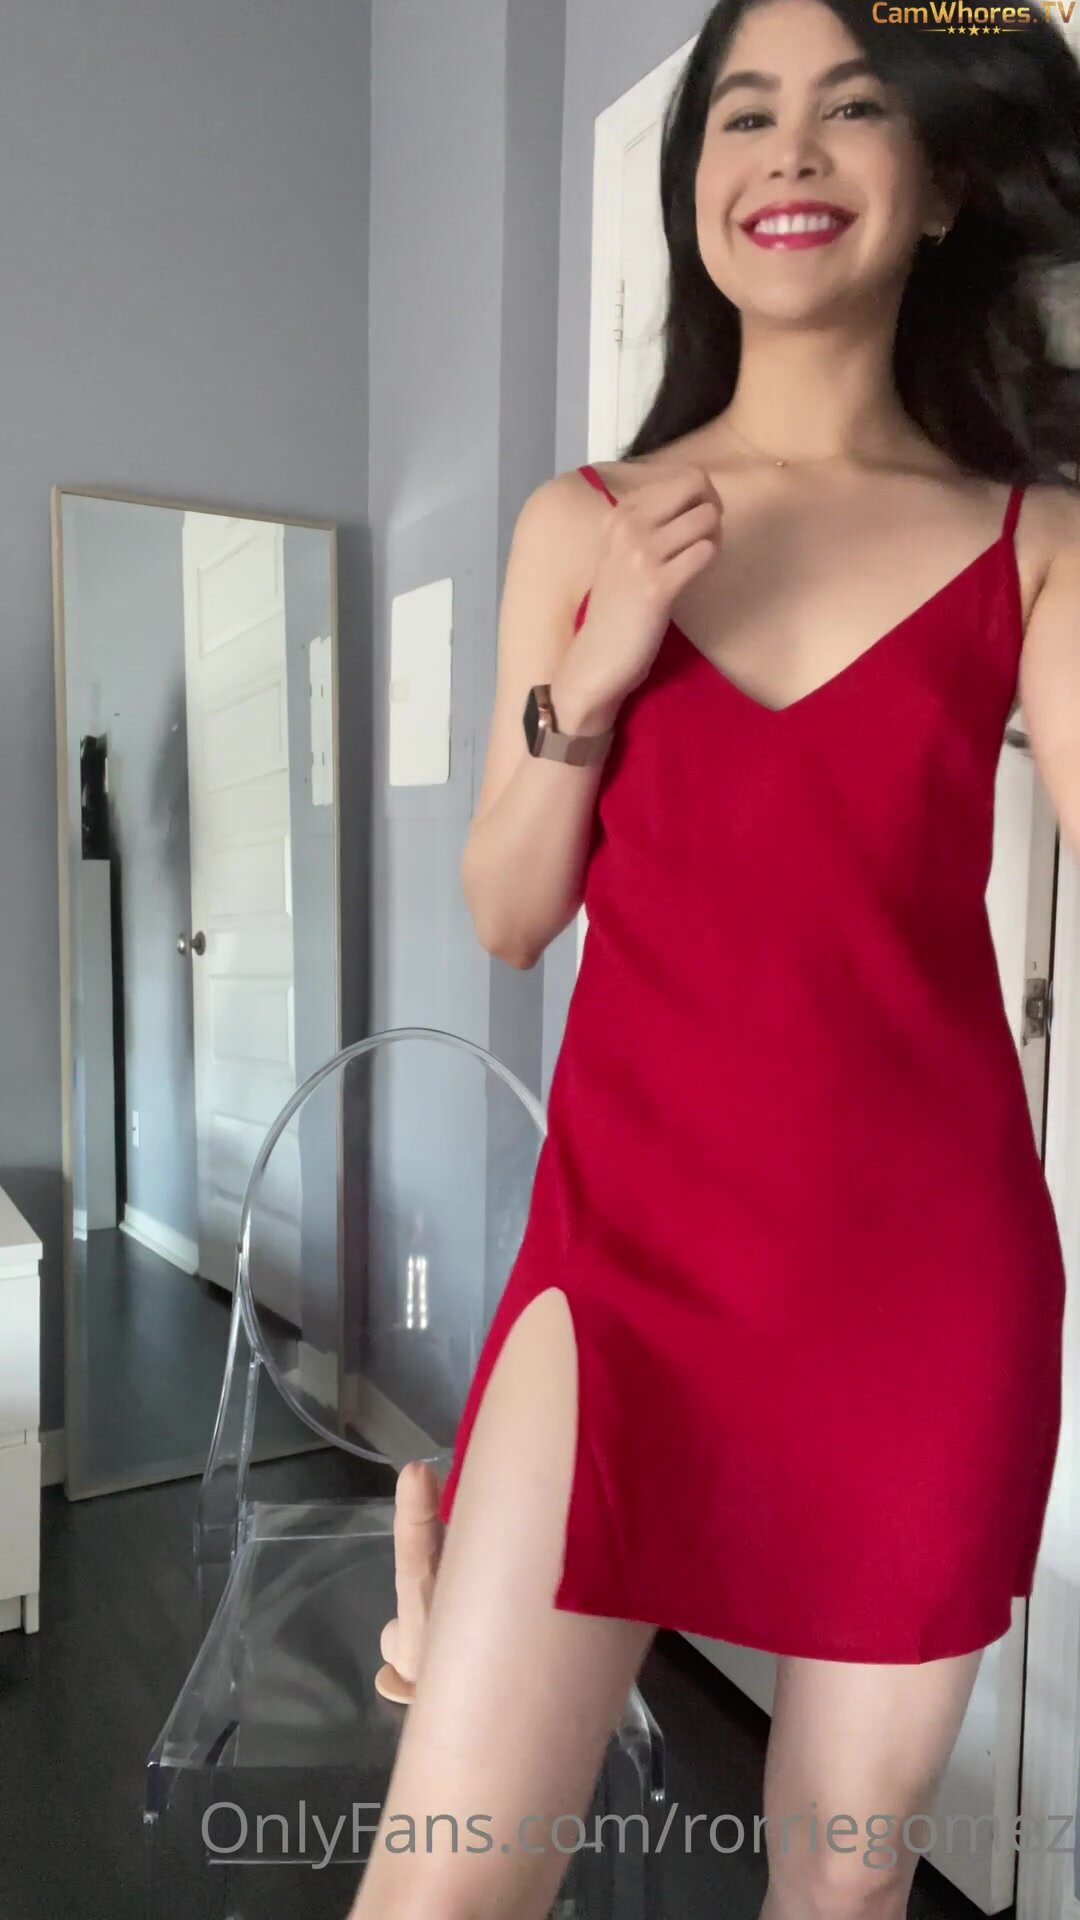 cute red dress girl dildo fuck